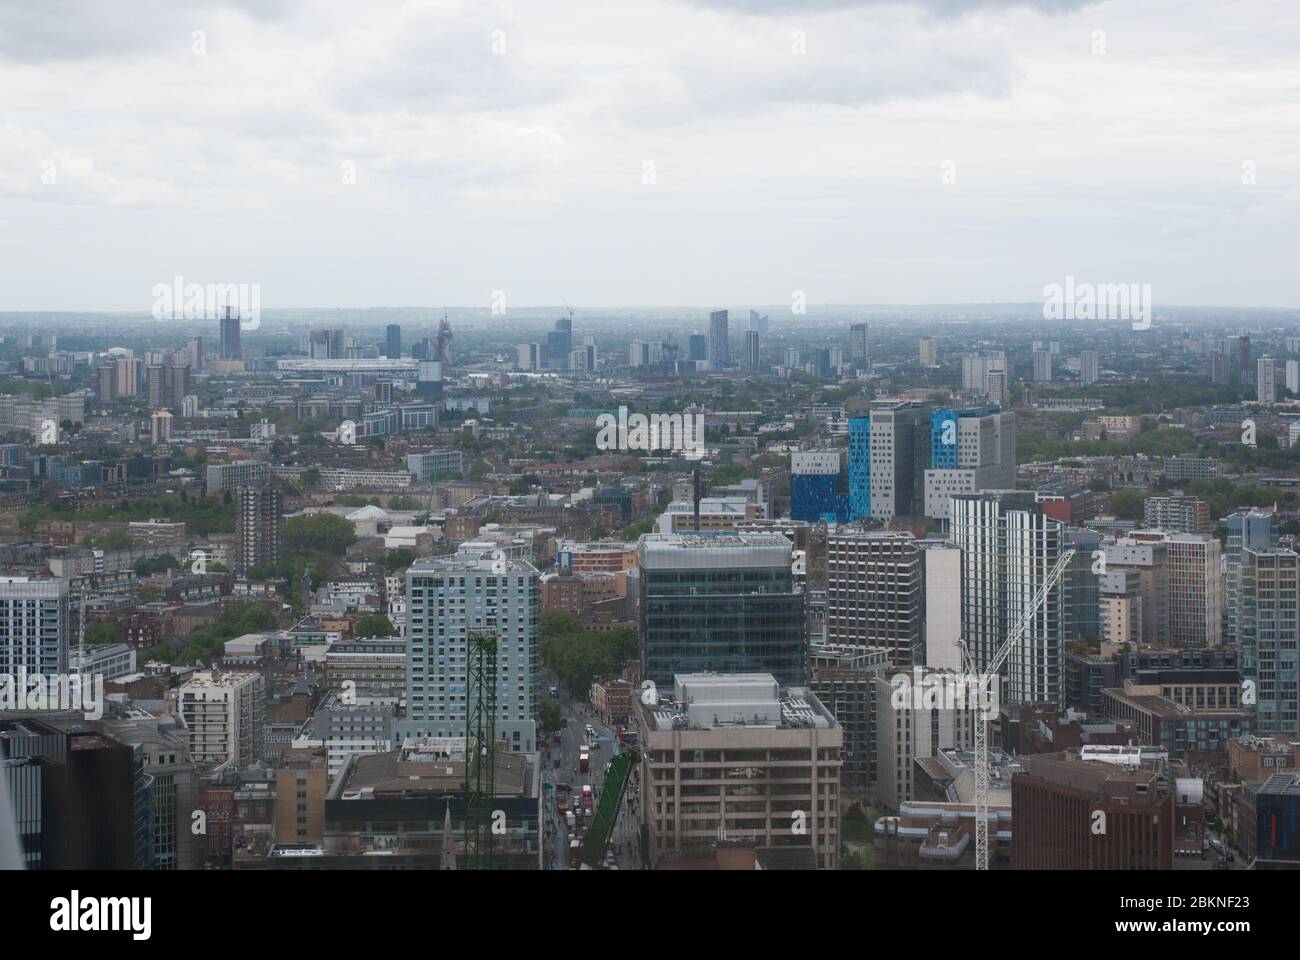 Royal London Hospital Aerial View of Buildings Architecture East London Skyline by HOK Architects Skanska Stock Photo